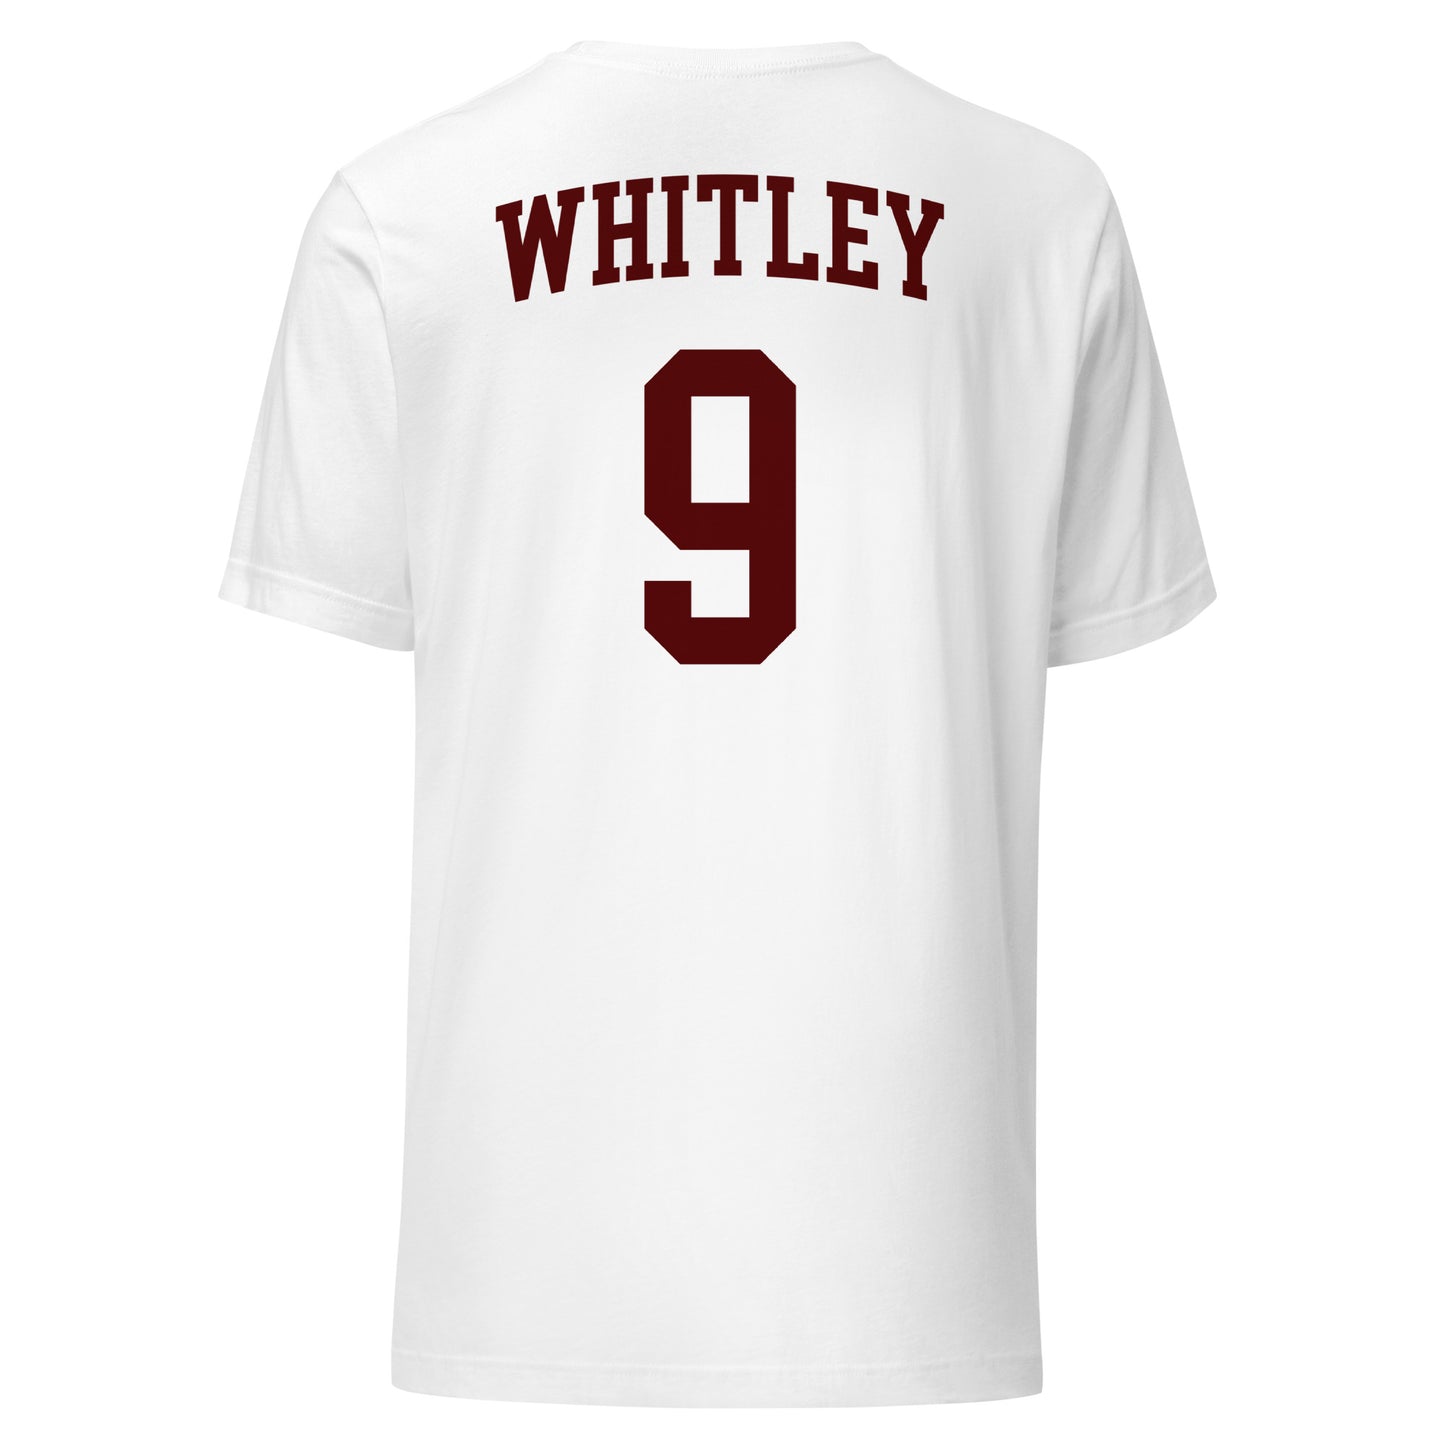 Whitley Legacy